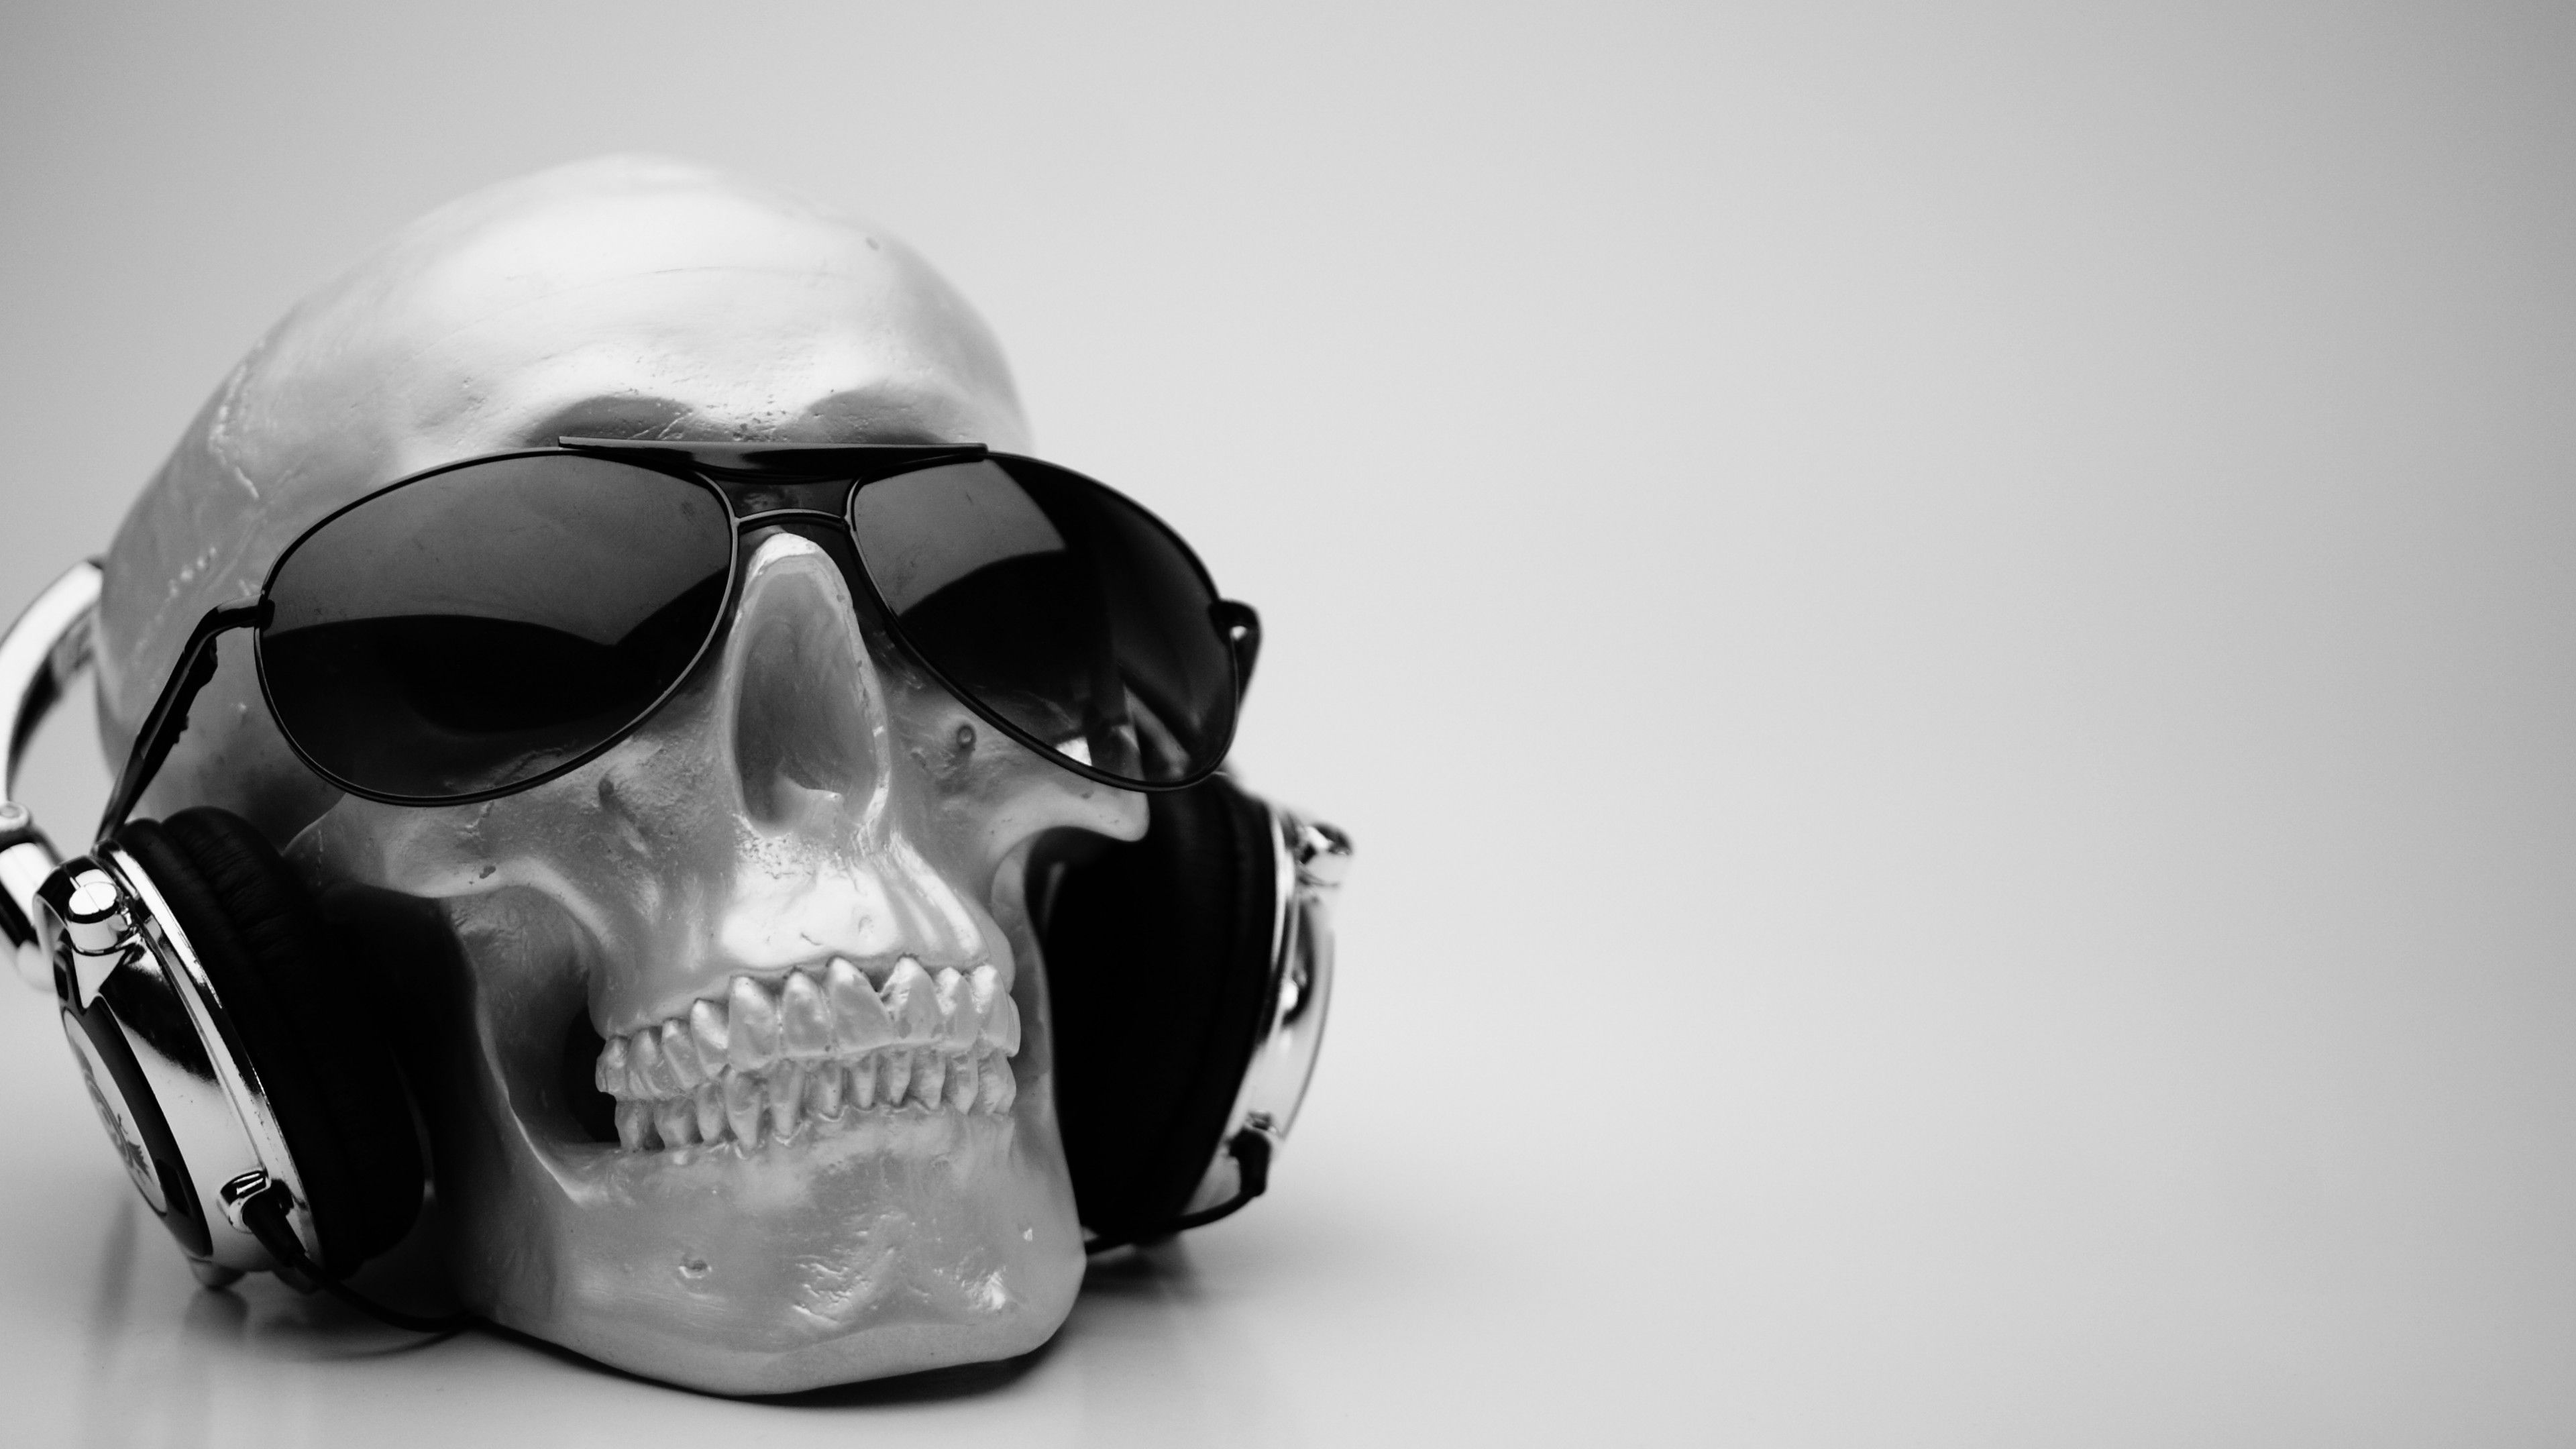 Download Skull & Headphones Black & White HD Wallpaper for Desktop and Mobiles 4K Ultra HD